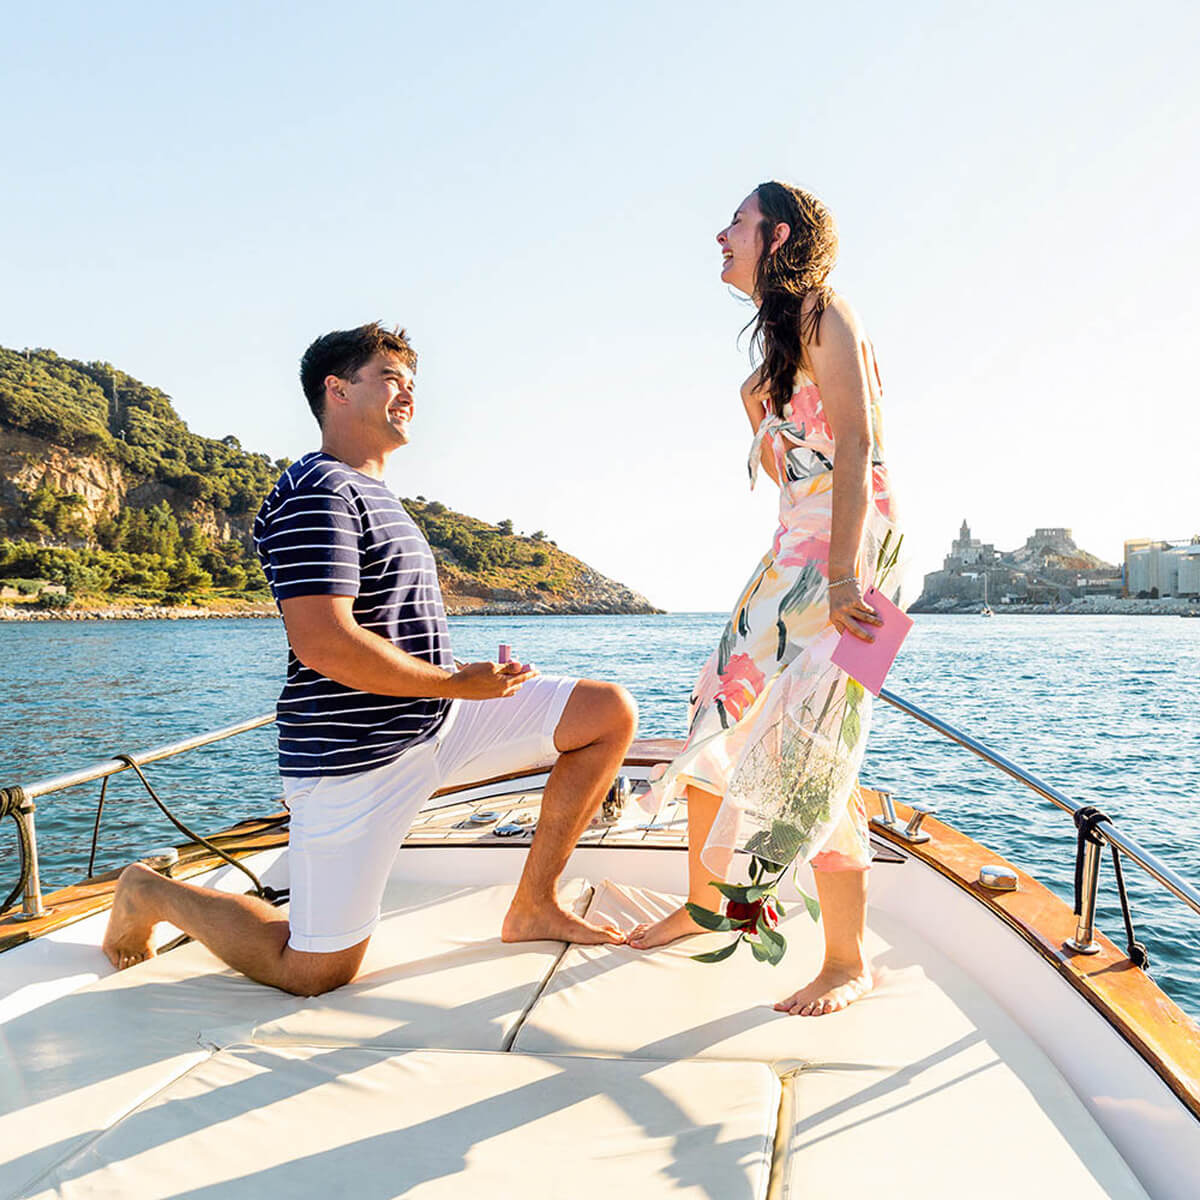 Guy proposing on a boat in Cinque Terre